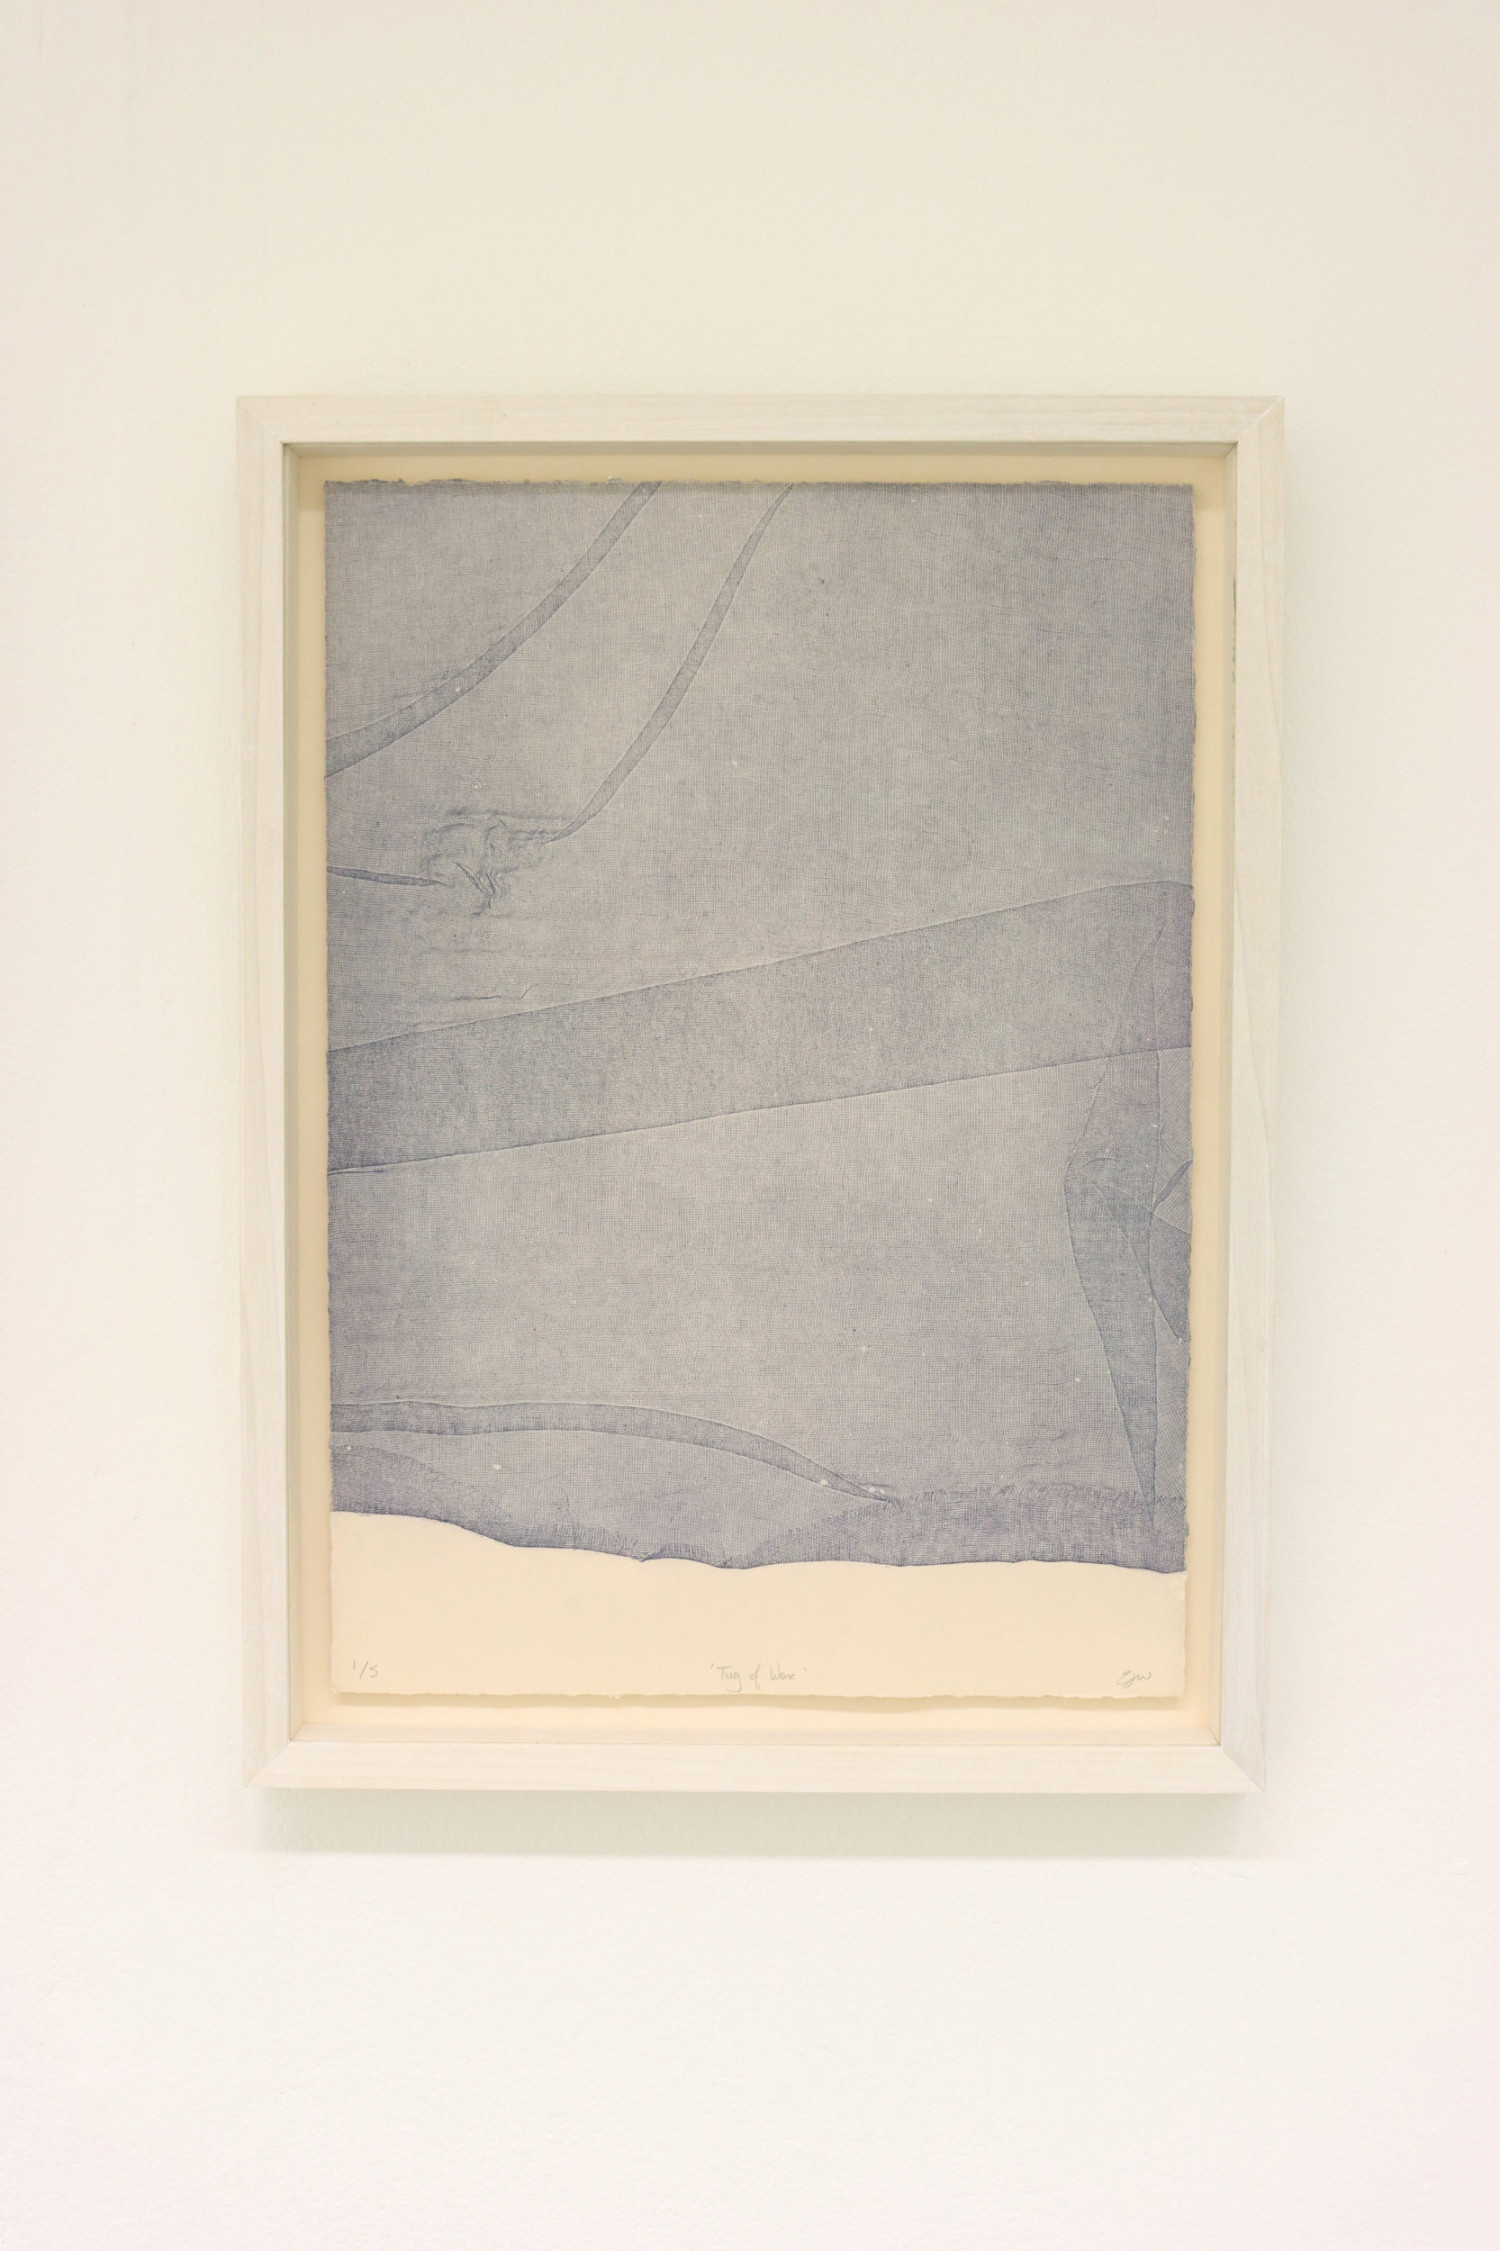 *Tug of War*, soft ground etching, 29 x 40 cm